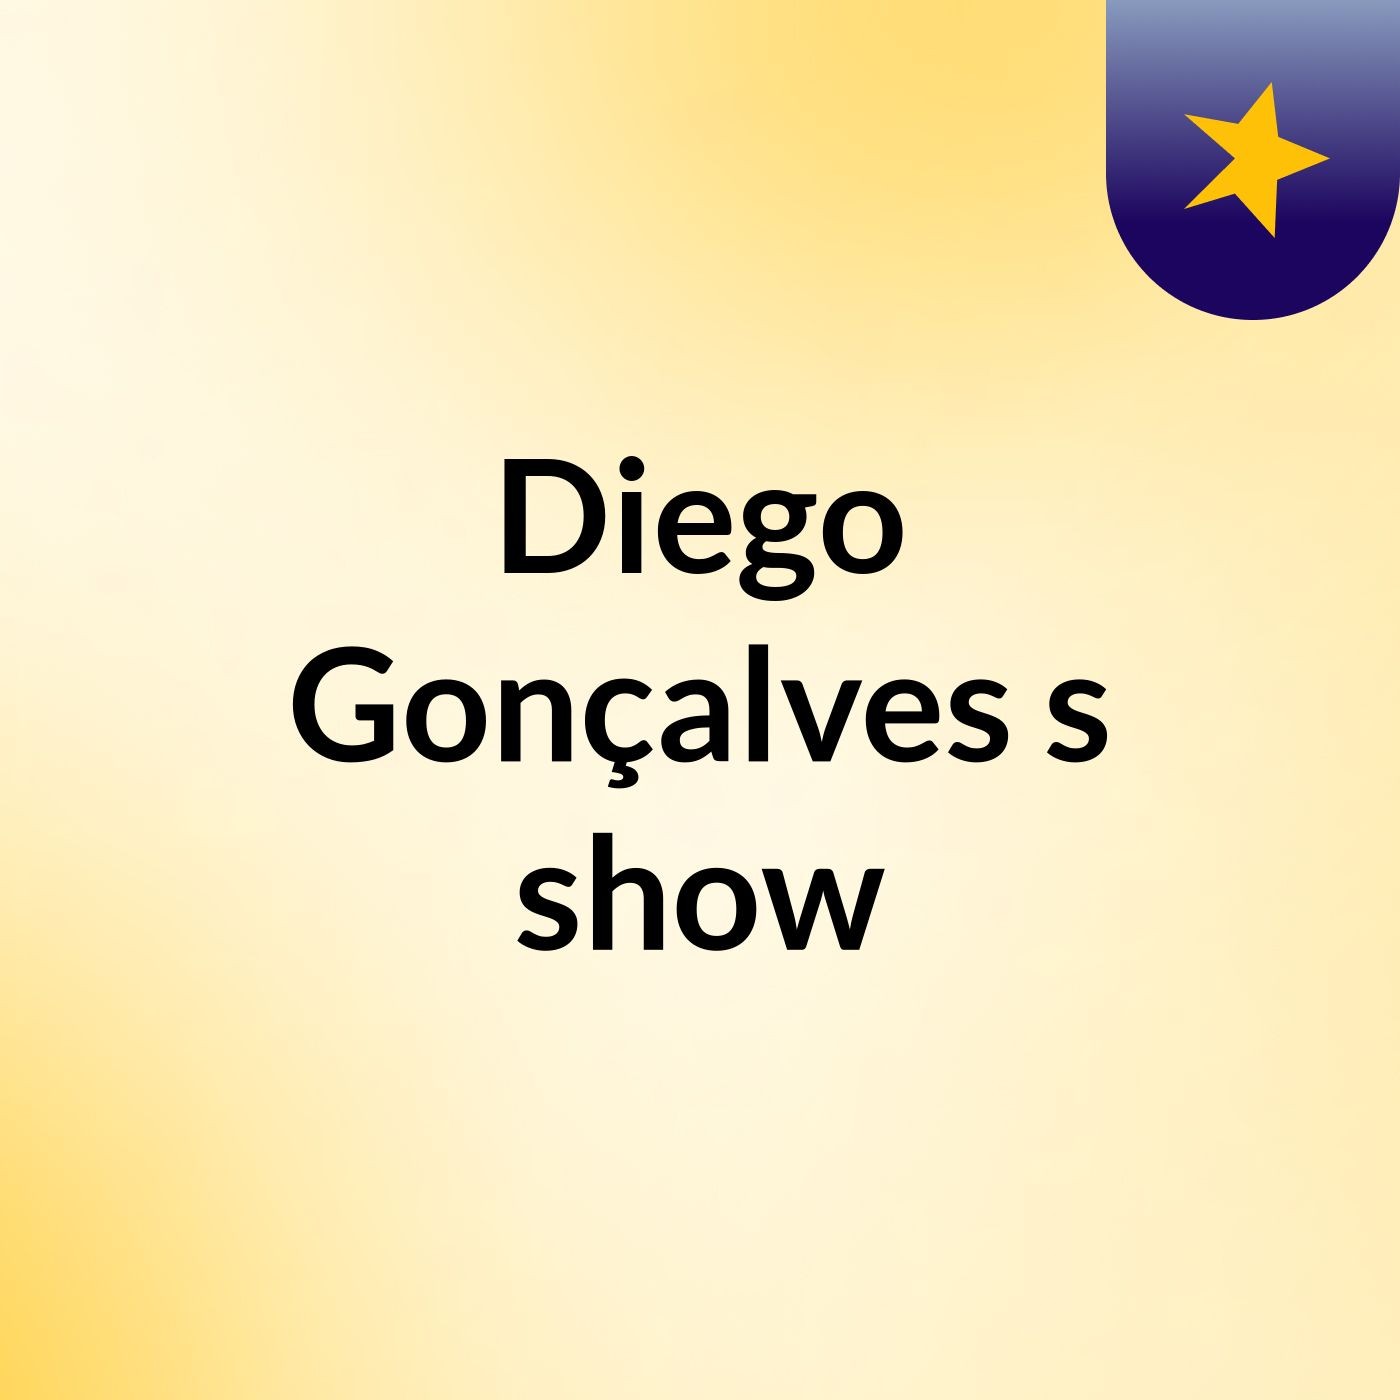 Diego Gonçalves's show